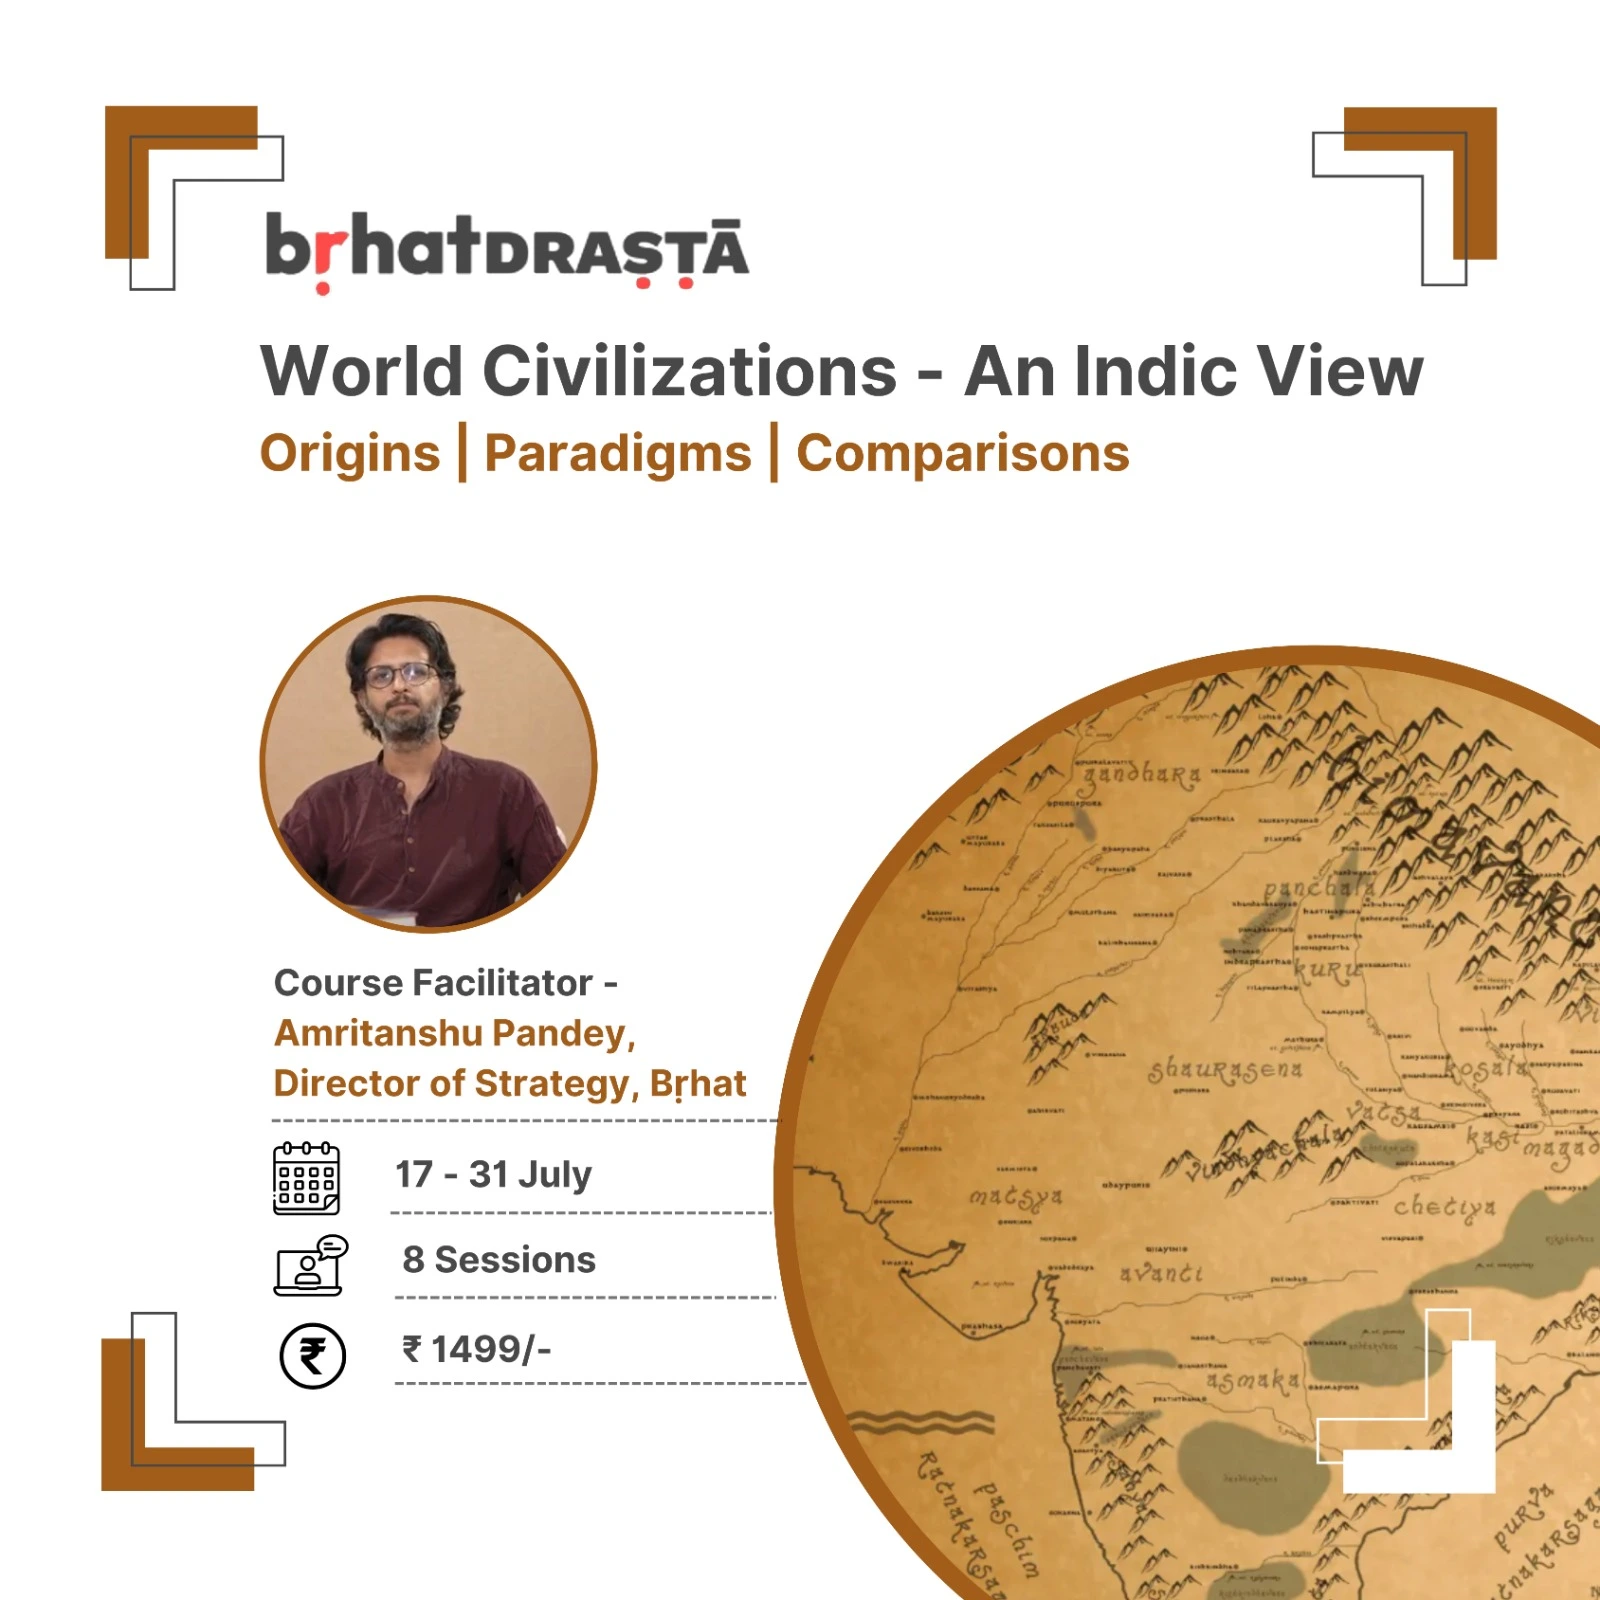 World Civilizations - An Indic View


Origins | Paradigms | Comparisons
